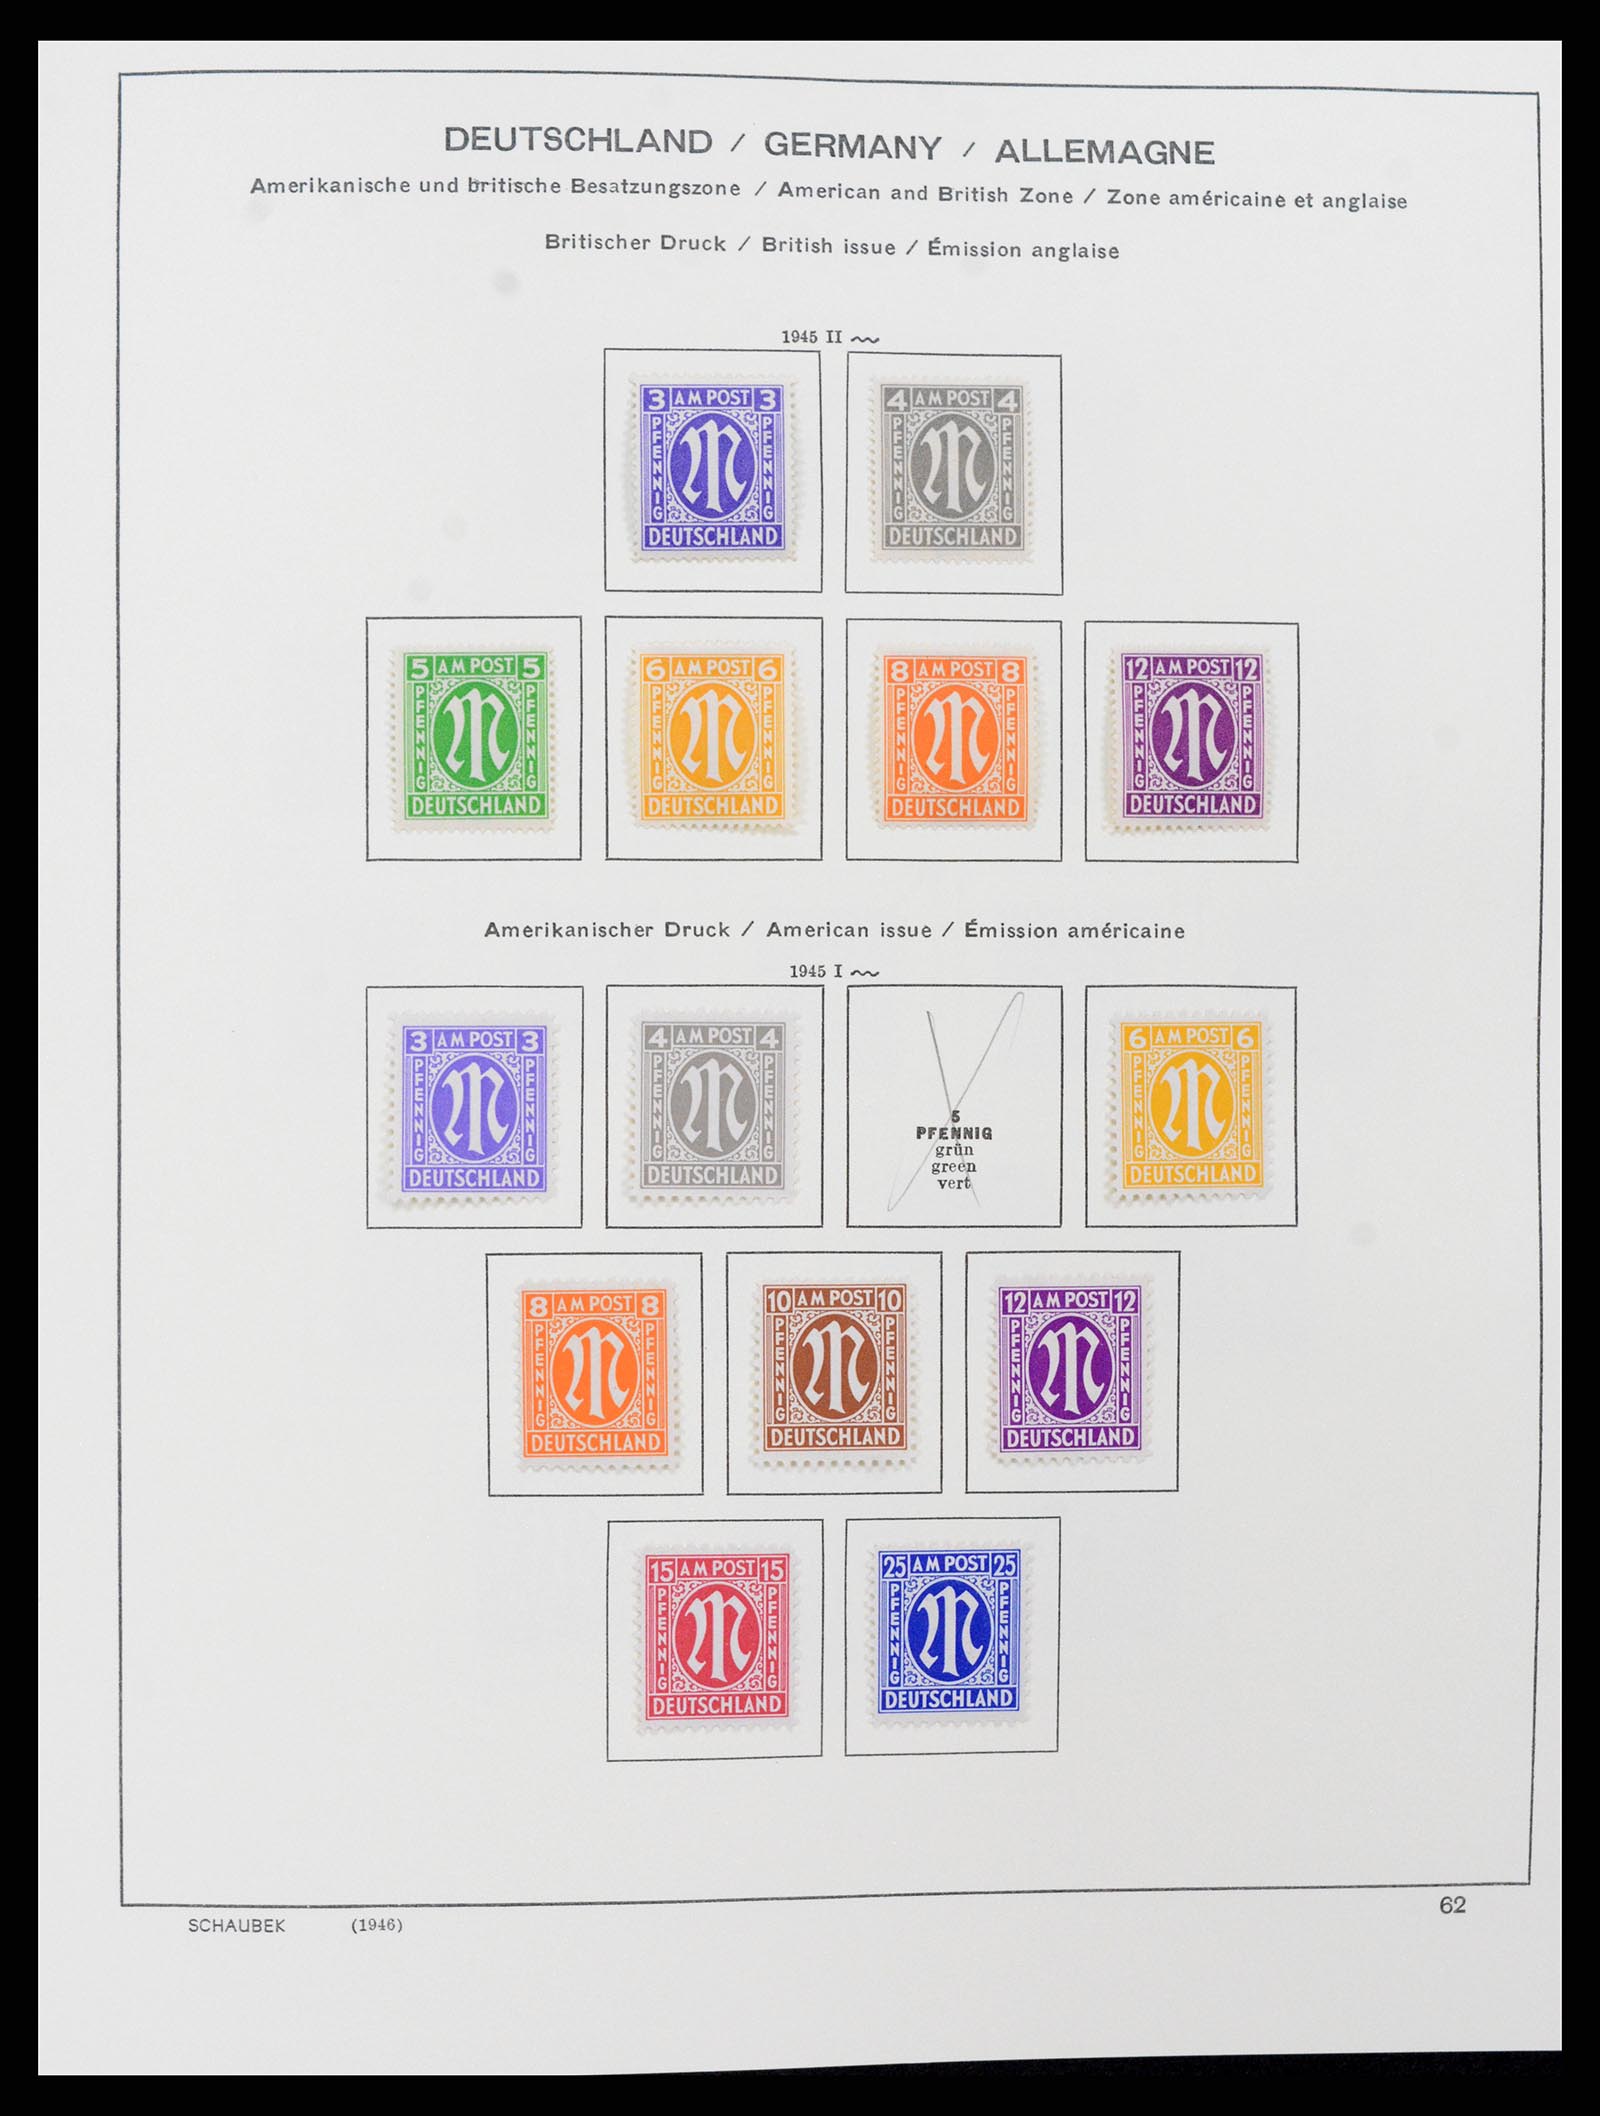 37645 007 - Stamp collection 37645 German Zones 1945-1949.